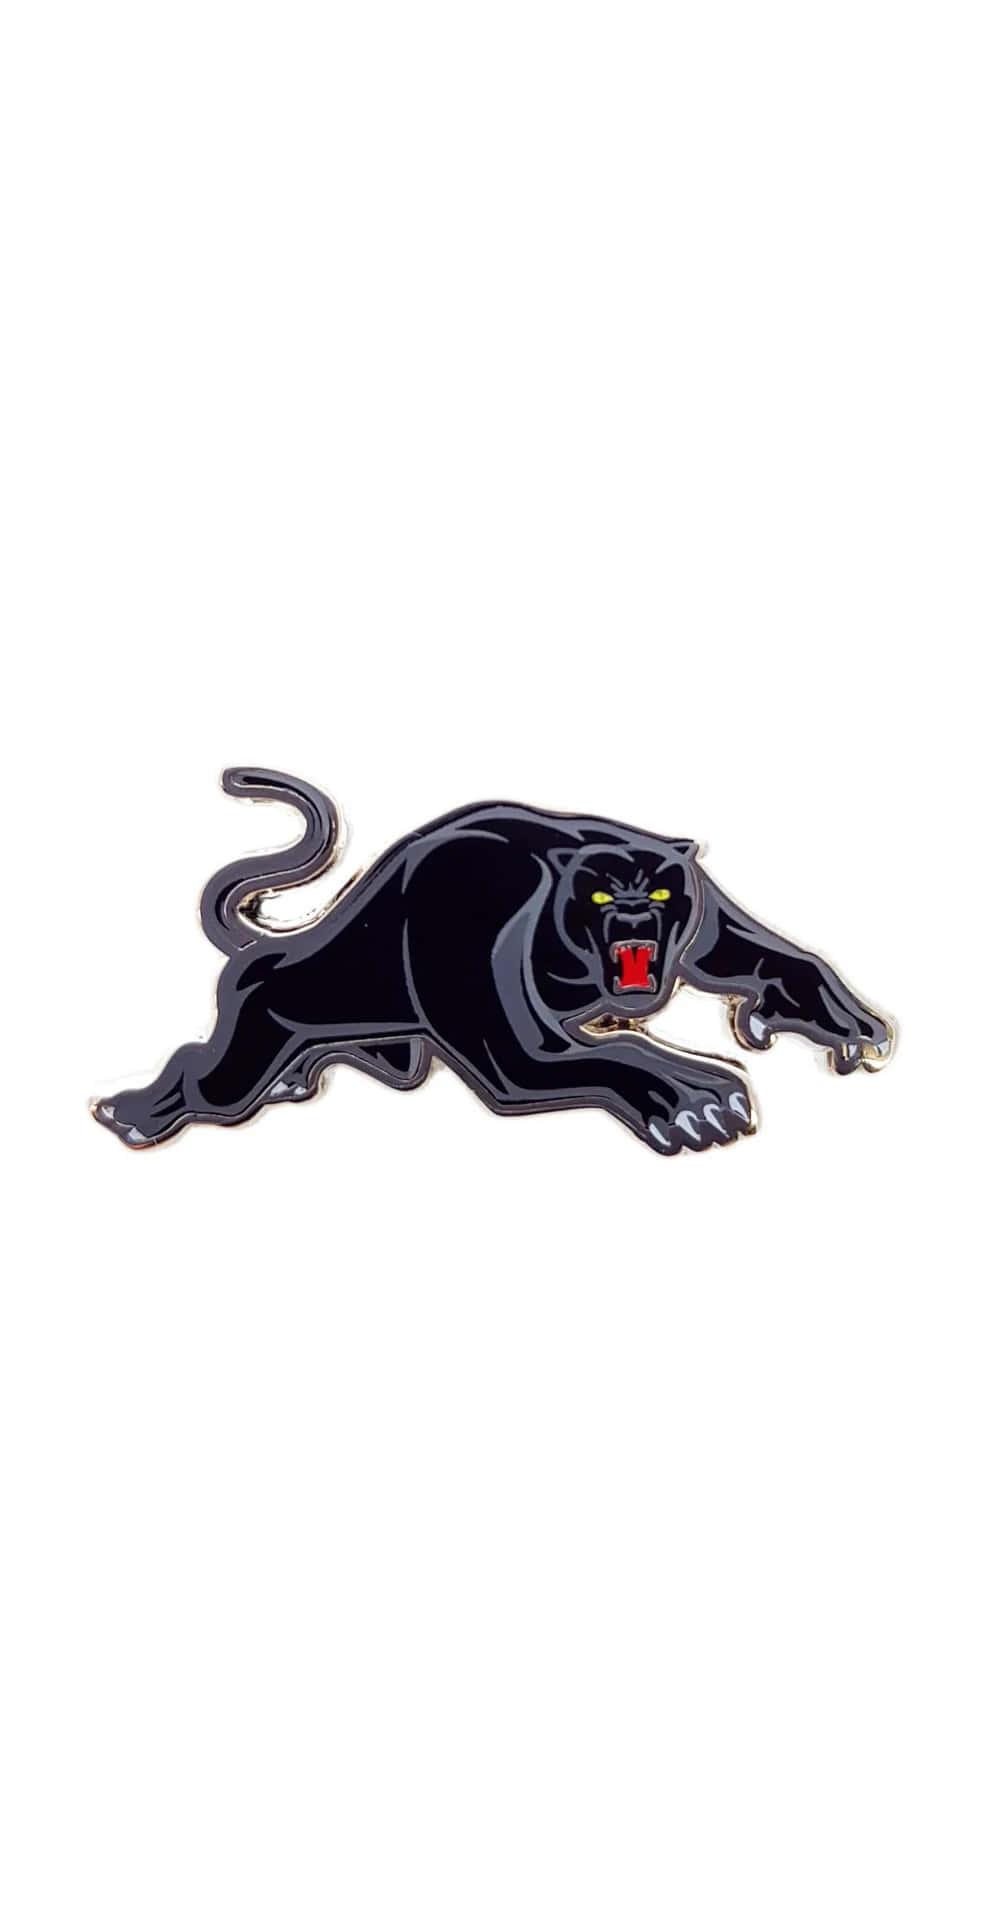 Penrithpanthers - Los Penrith Panthers Fondo de pantalla